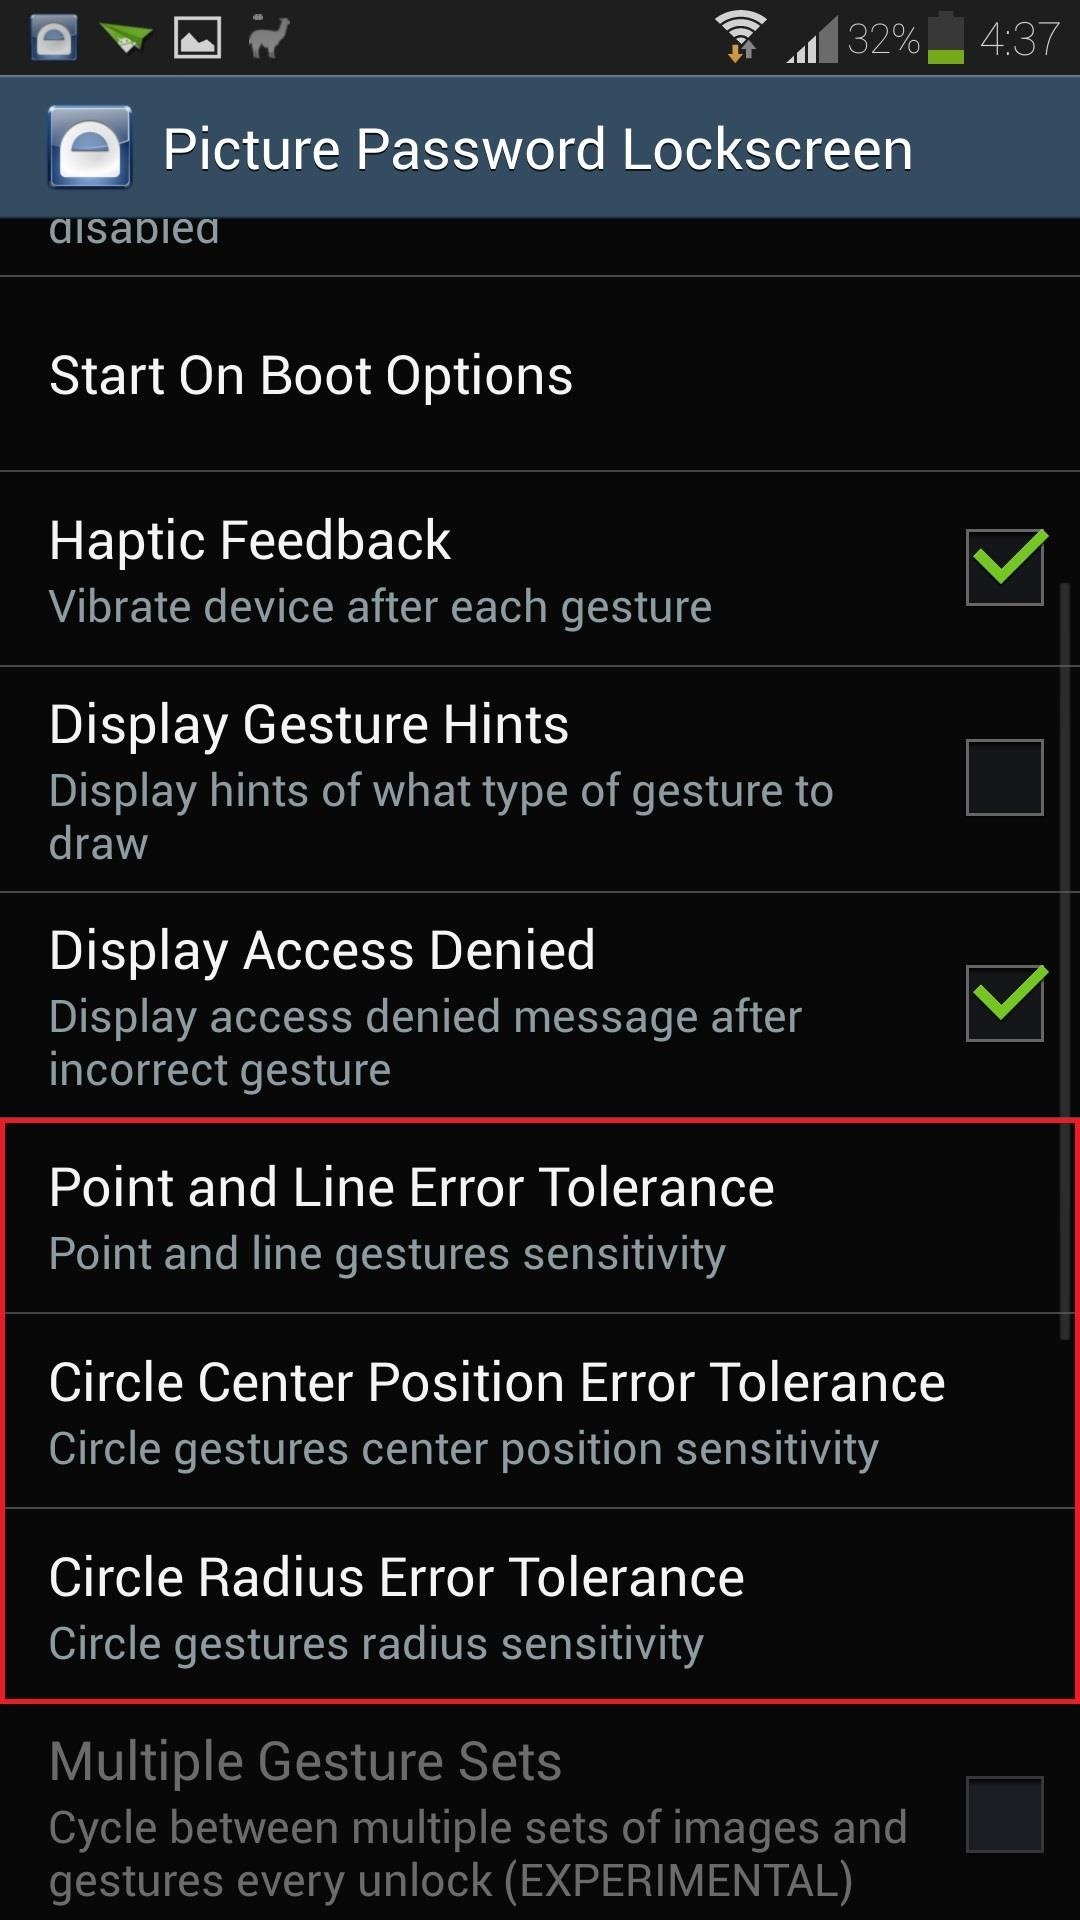 How to Unlock Your Samsung Galaxy S4 Using Customizable Swipe Gestures